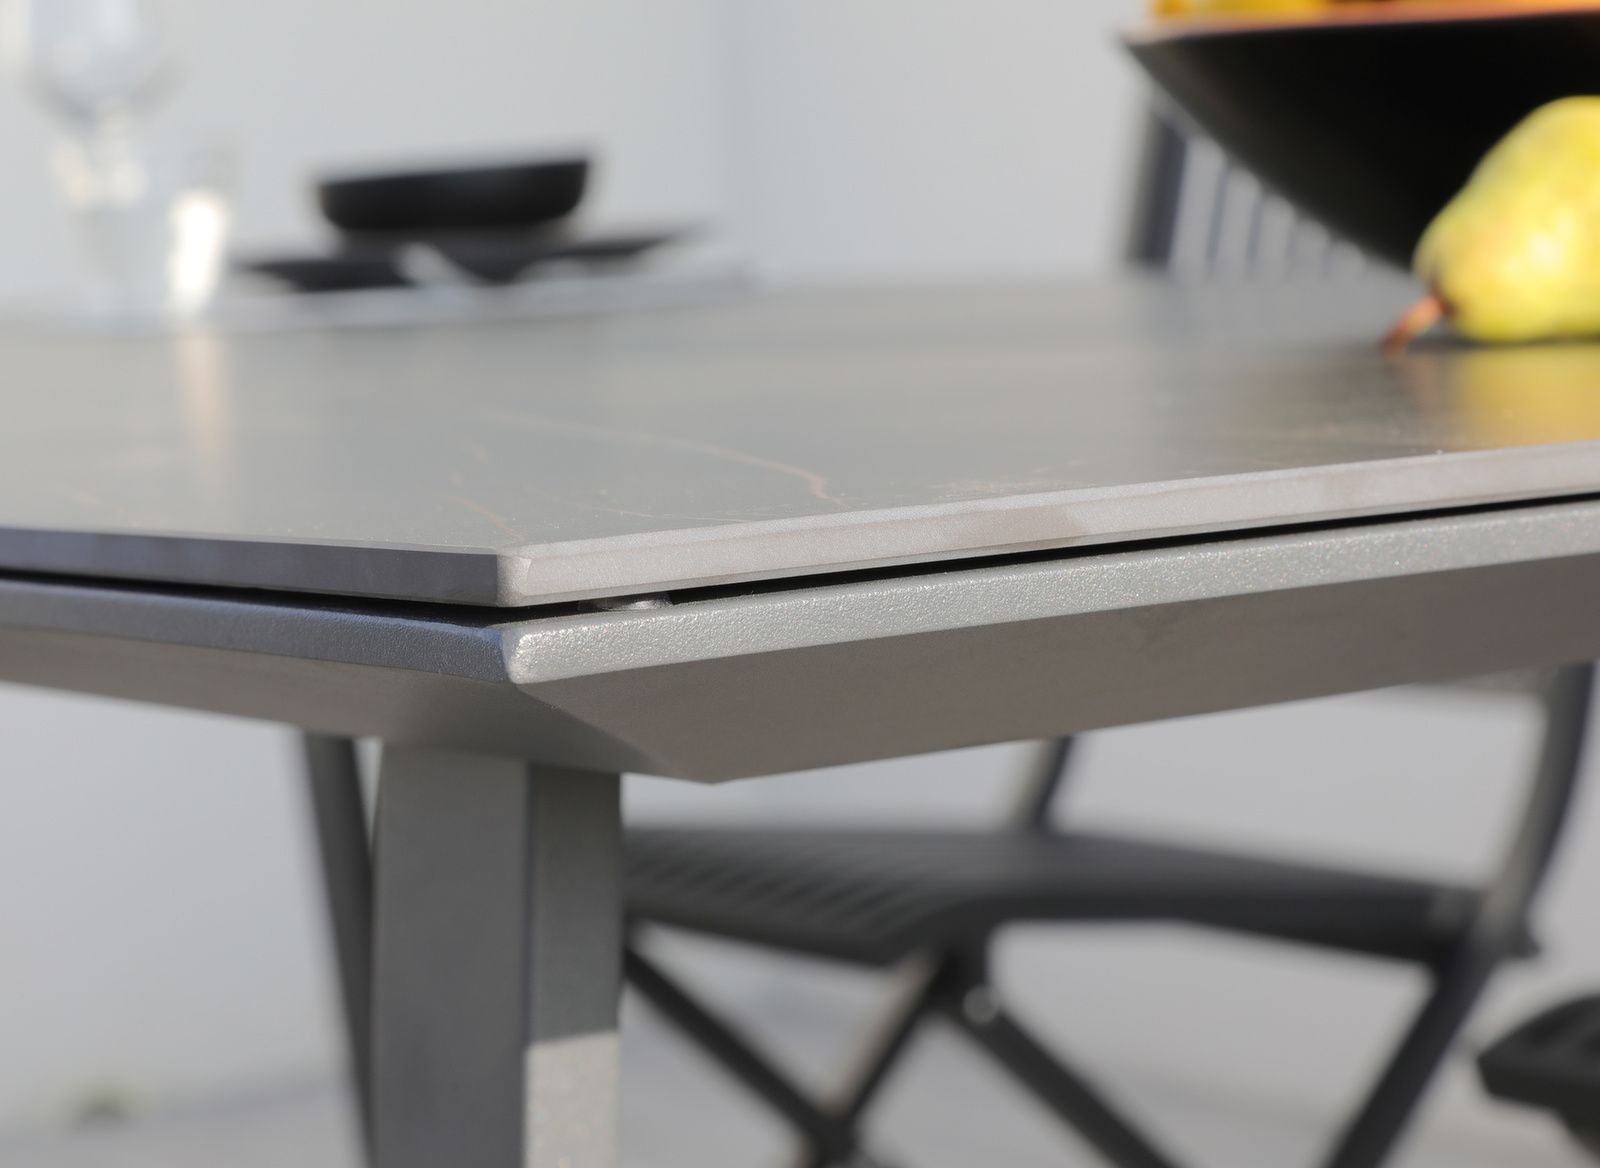 Table Caspar 200 cm, plateau Kedra®